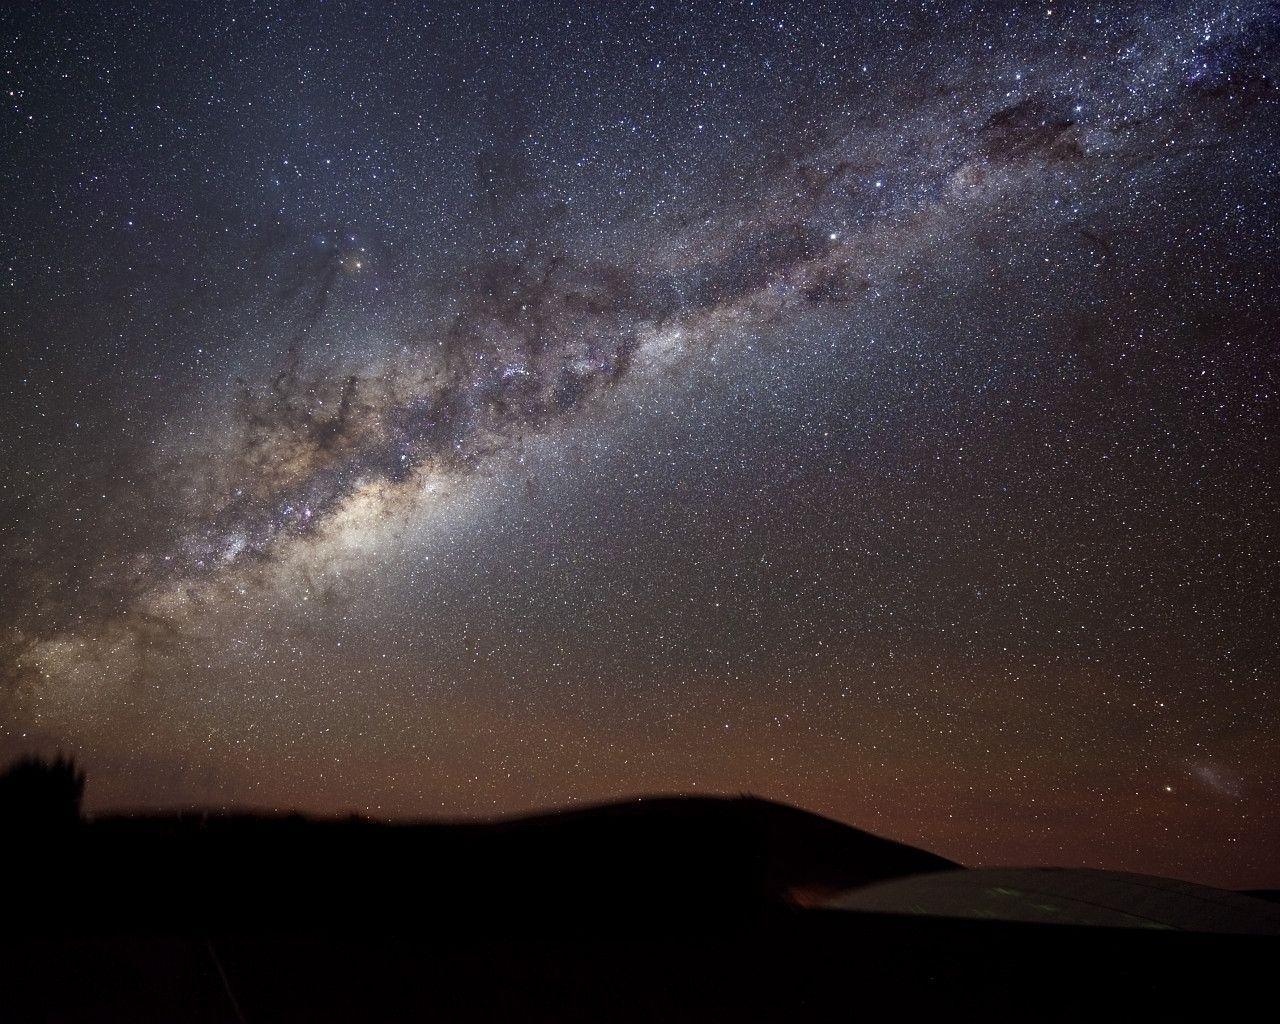 Milky Way Galaxy Background